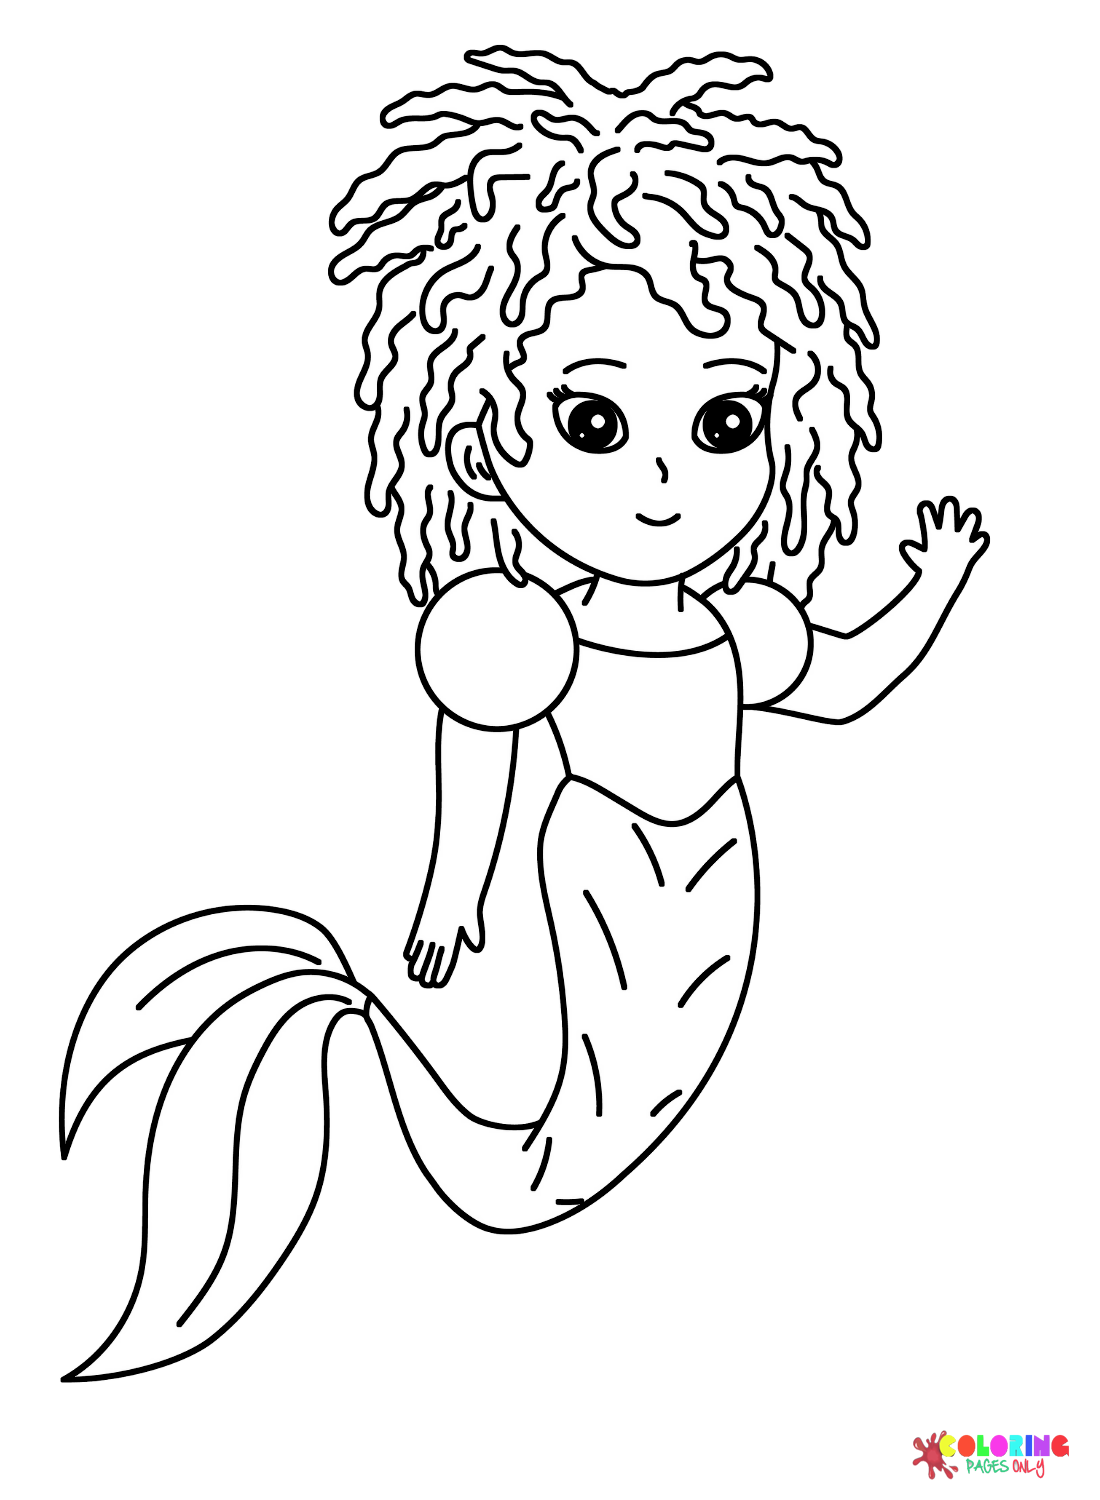 Mermaid with Dreadlocks Hair Coloring Page